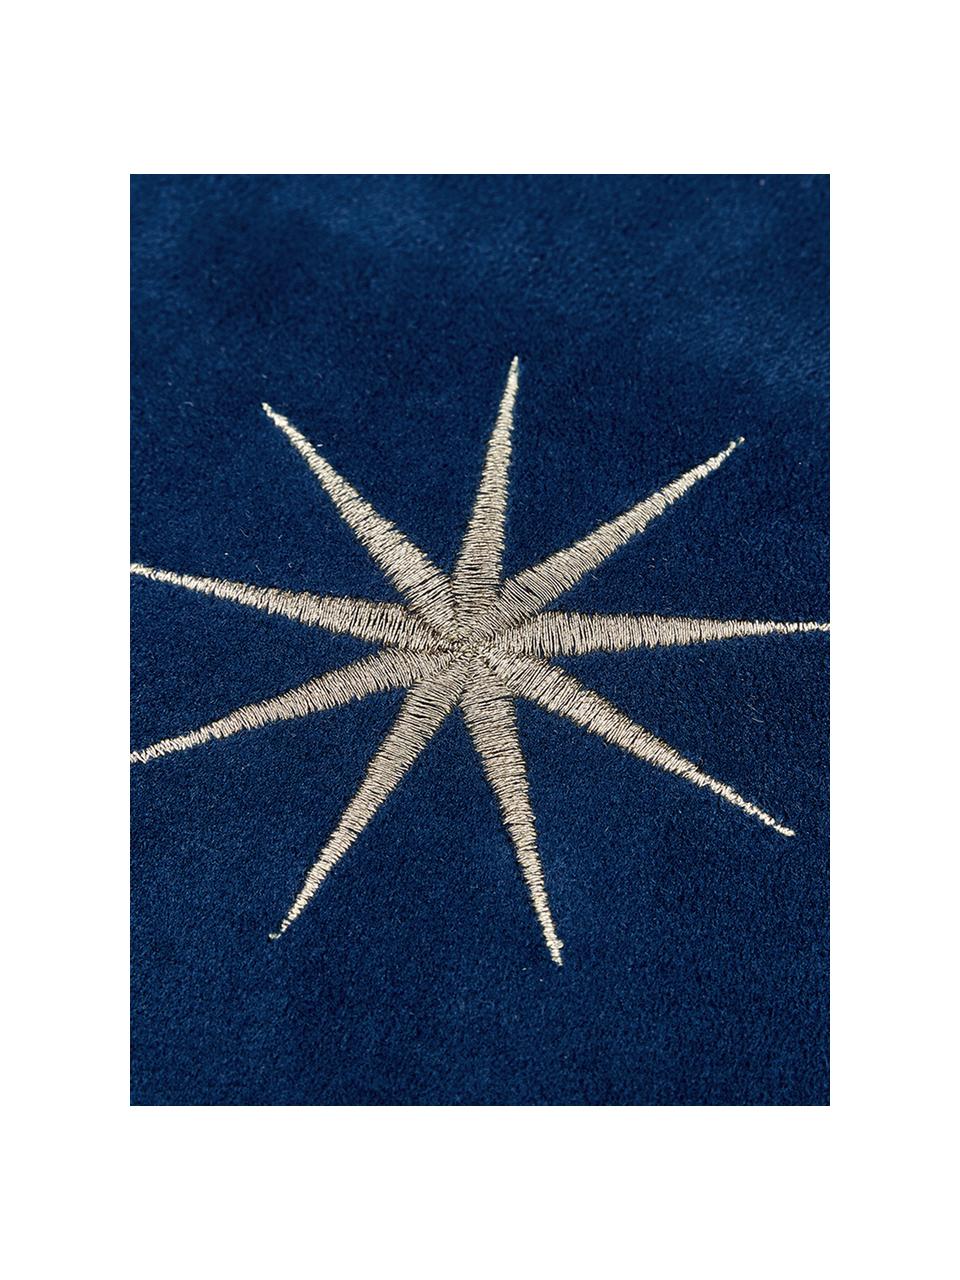 Federa in velluto con stelle ricamate Stars, Blu navy, Larg. 45 x Lung. 45 cm